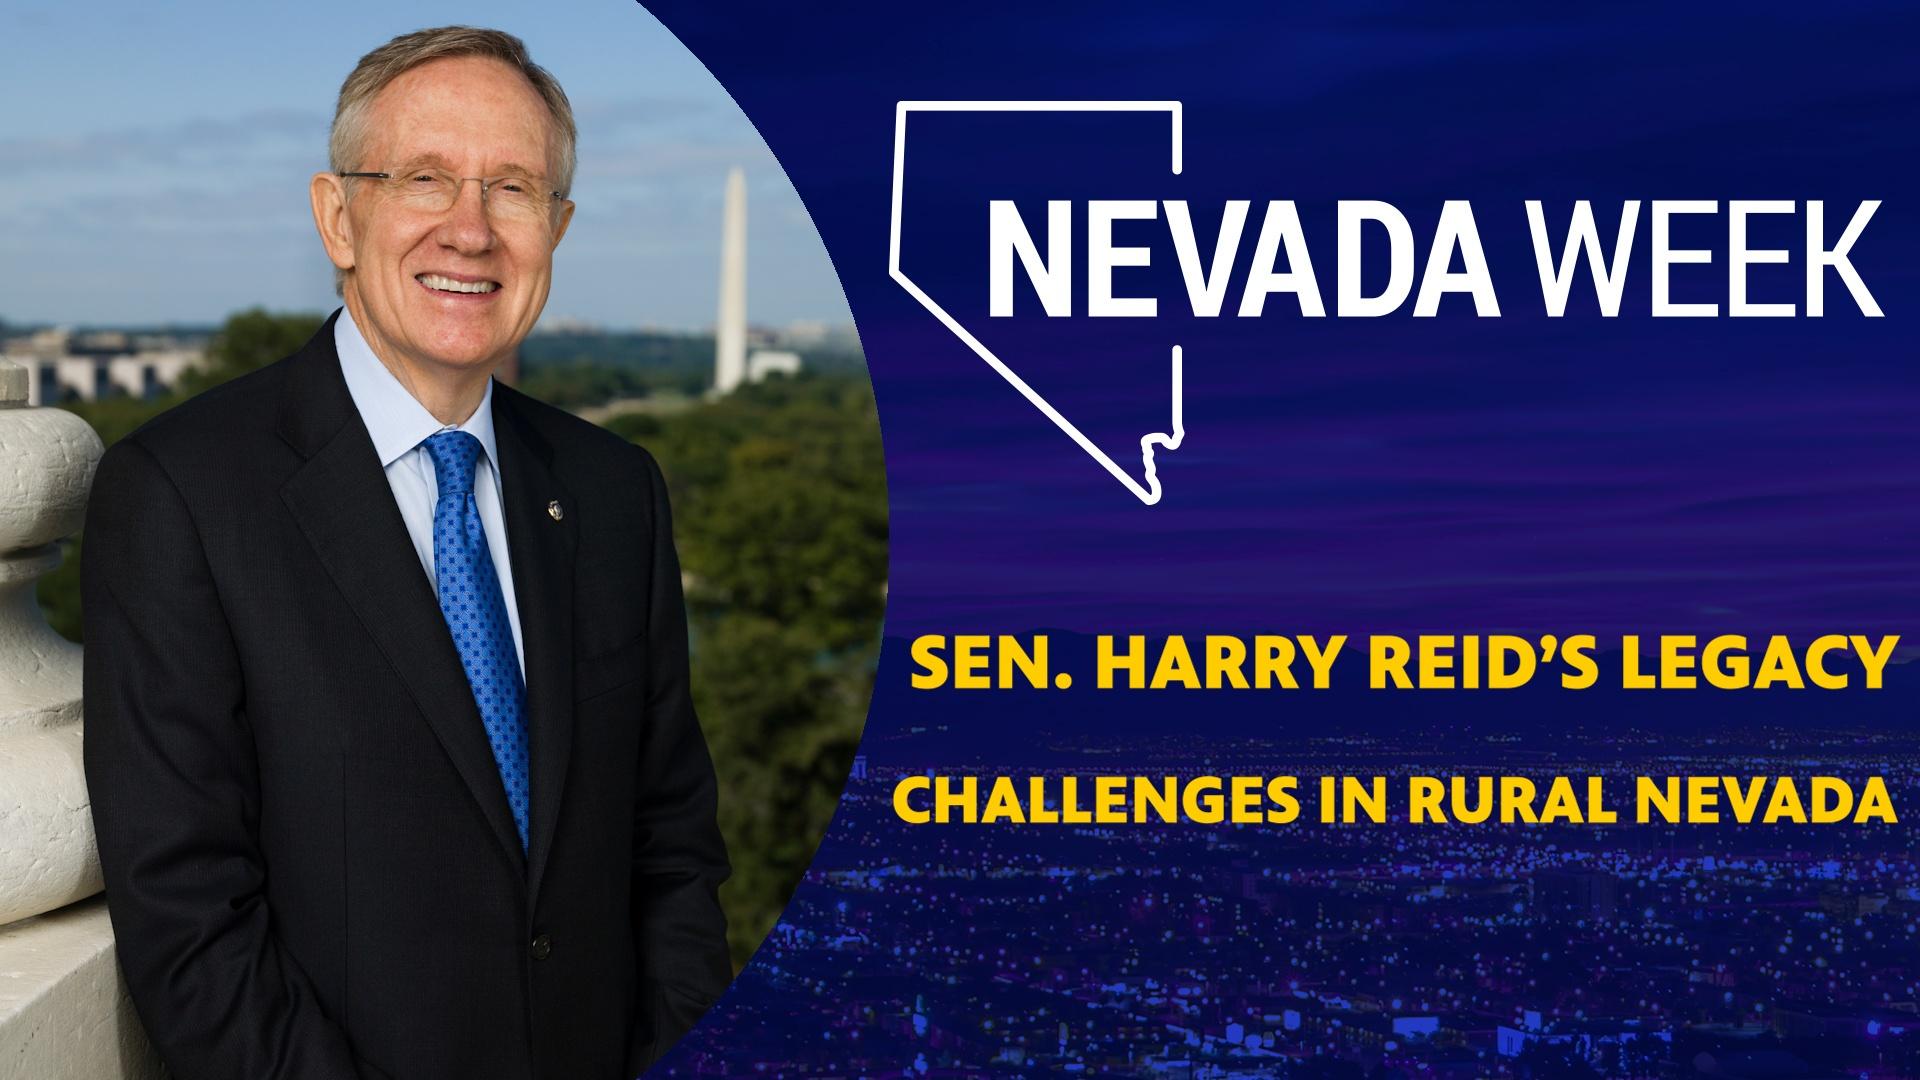 Senator Harry Reid’s Legacy, Challenges in Rural Nevada